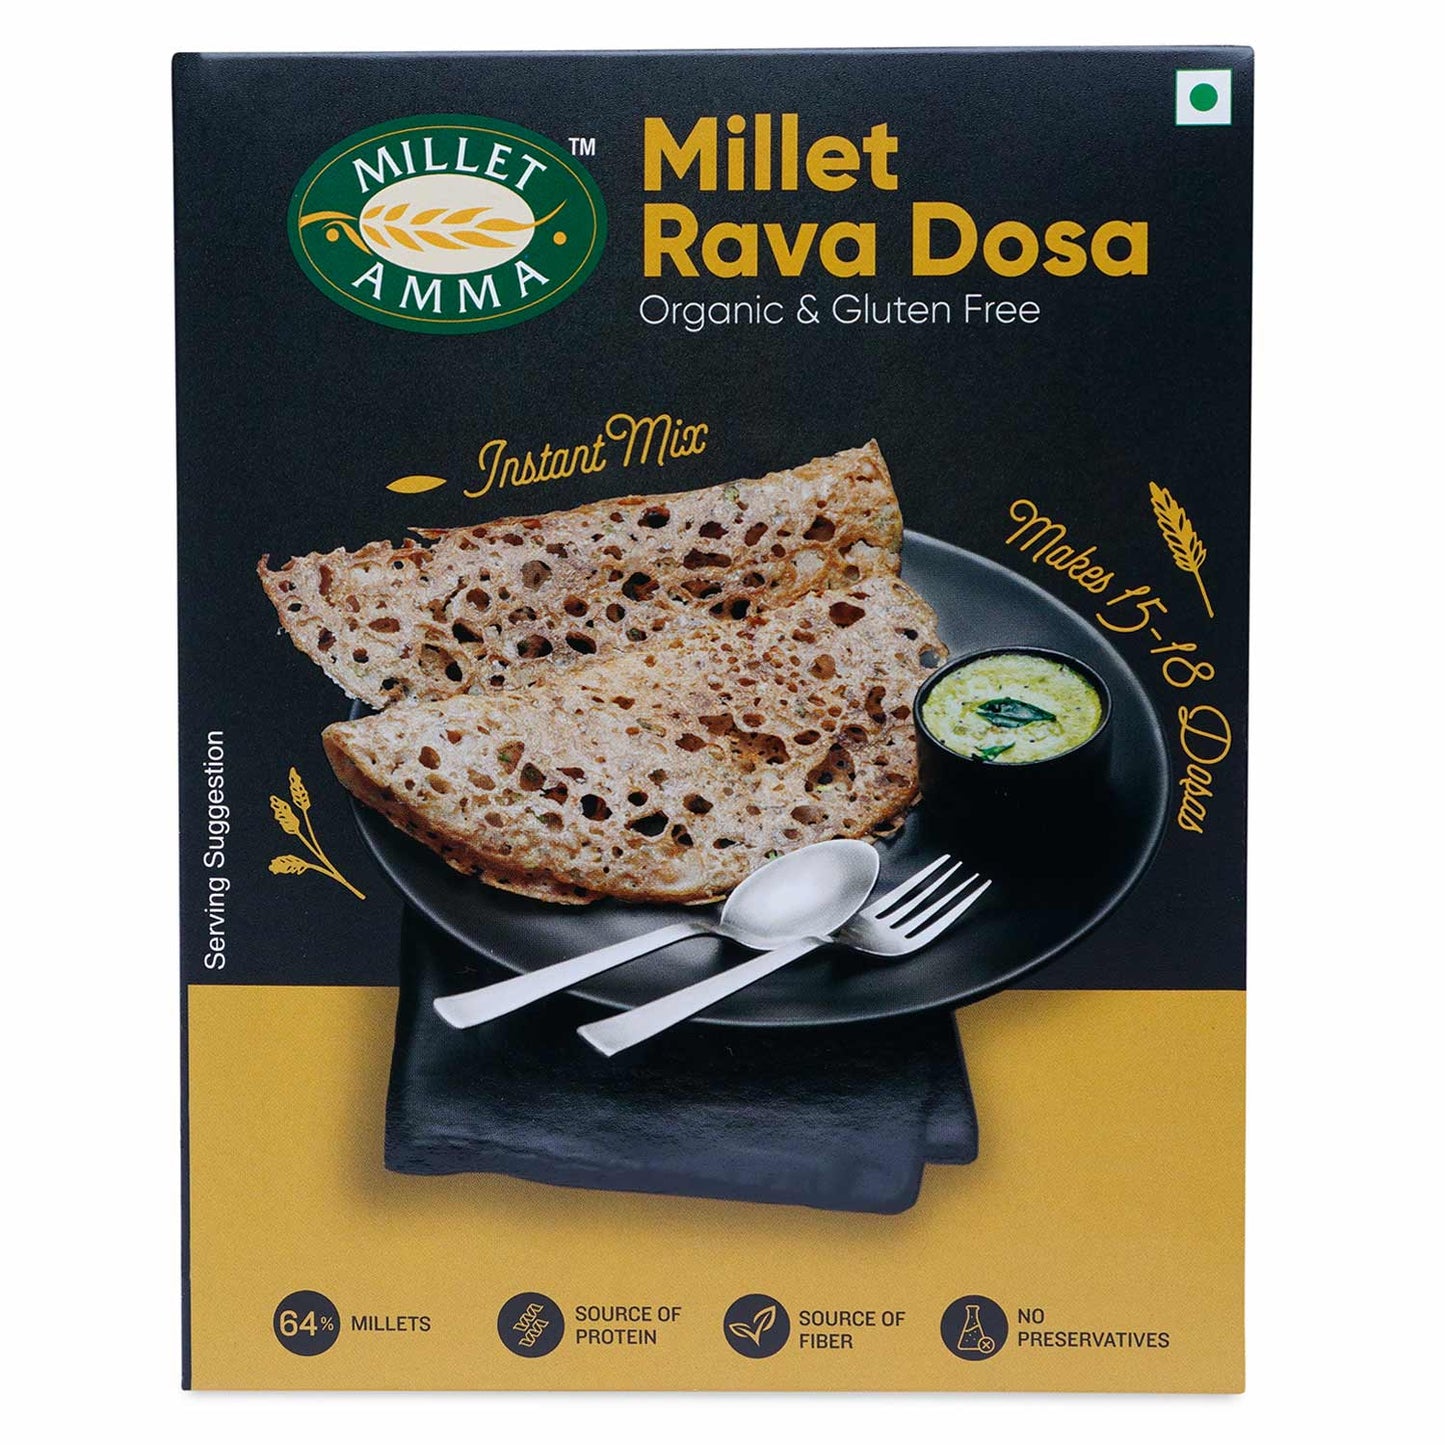 Millet Amma Millet Rava Dosa Mix - buy in USA, Australia, Canada